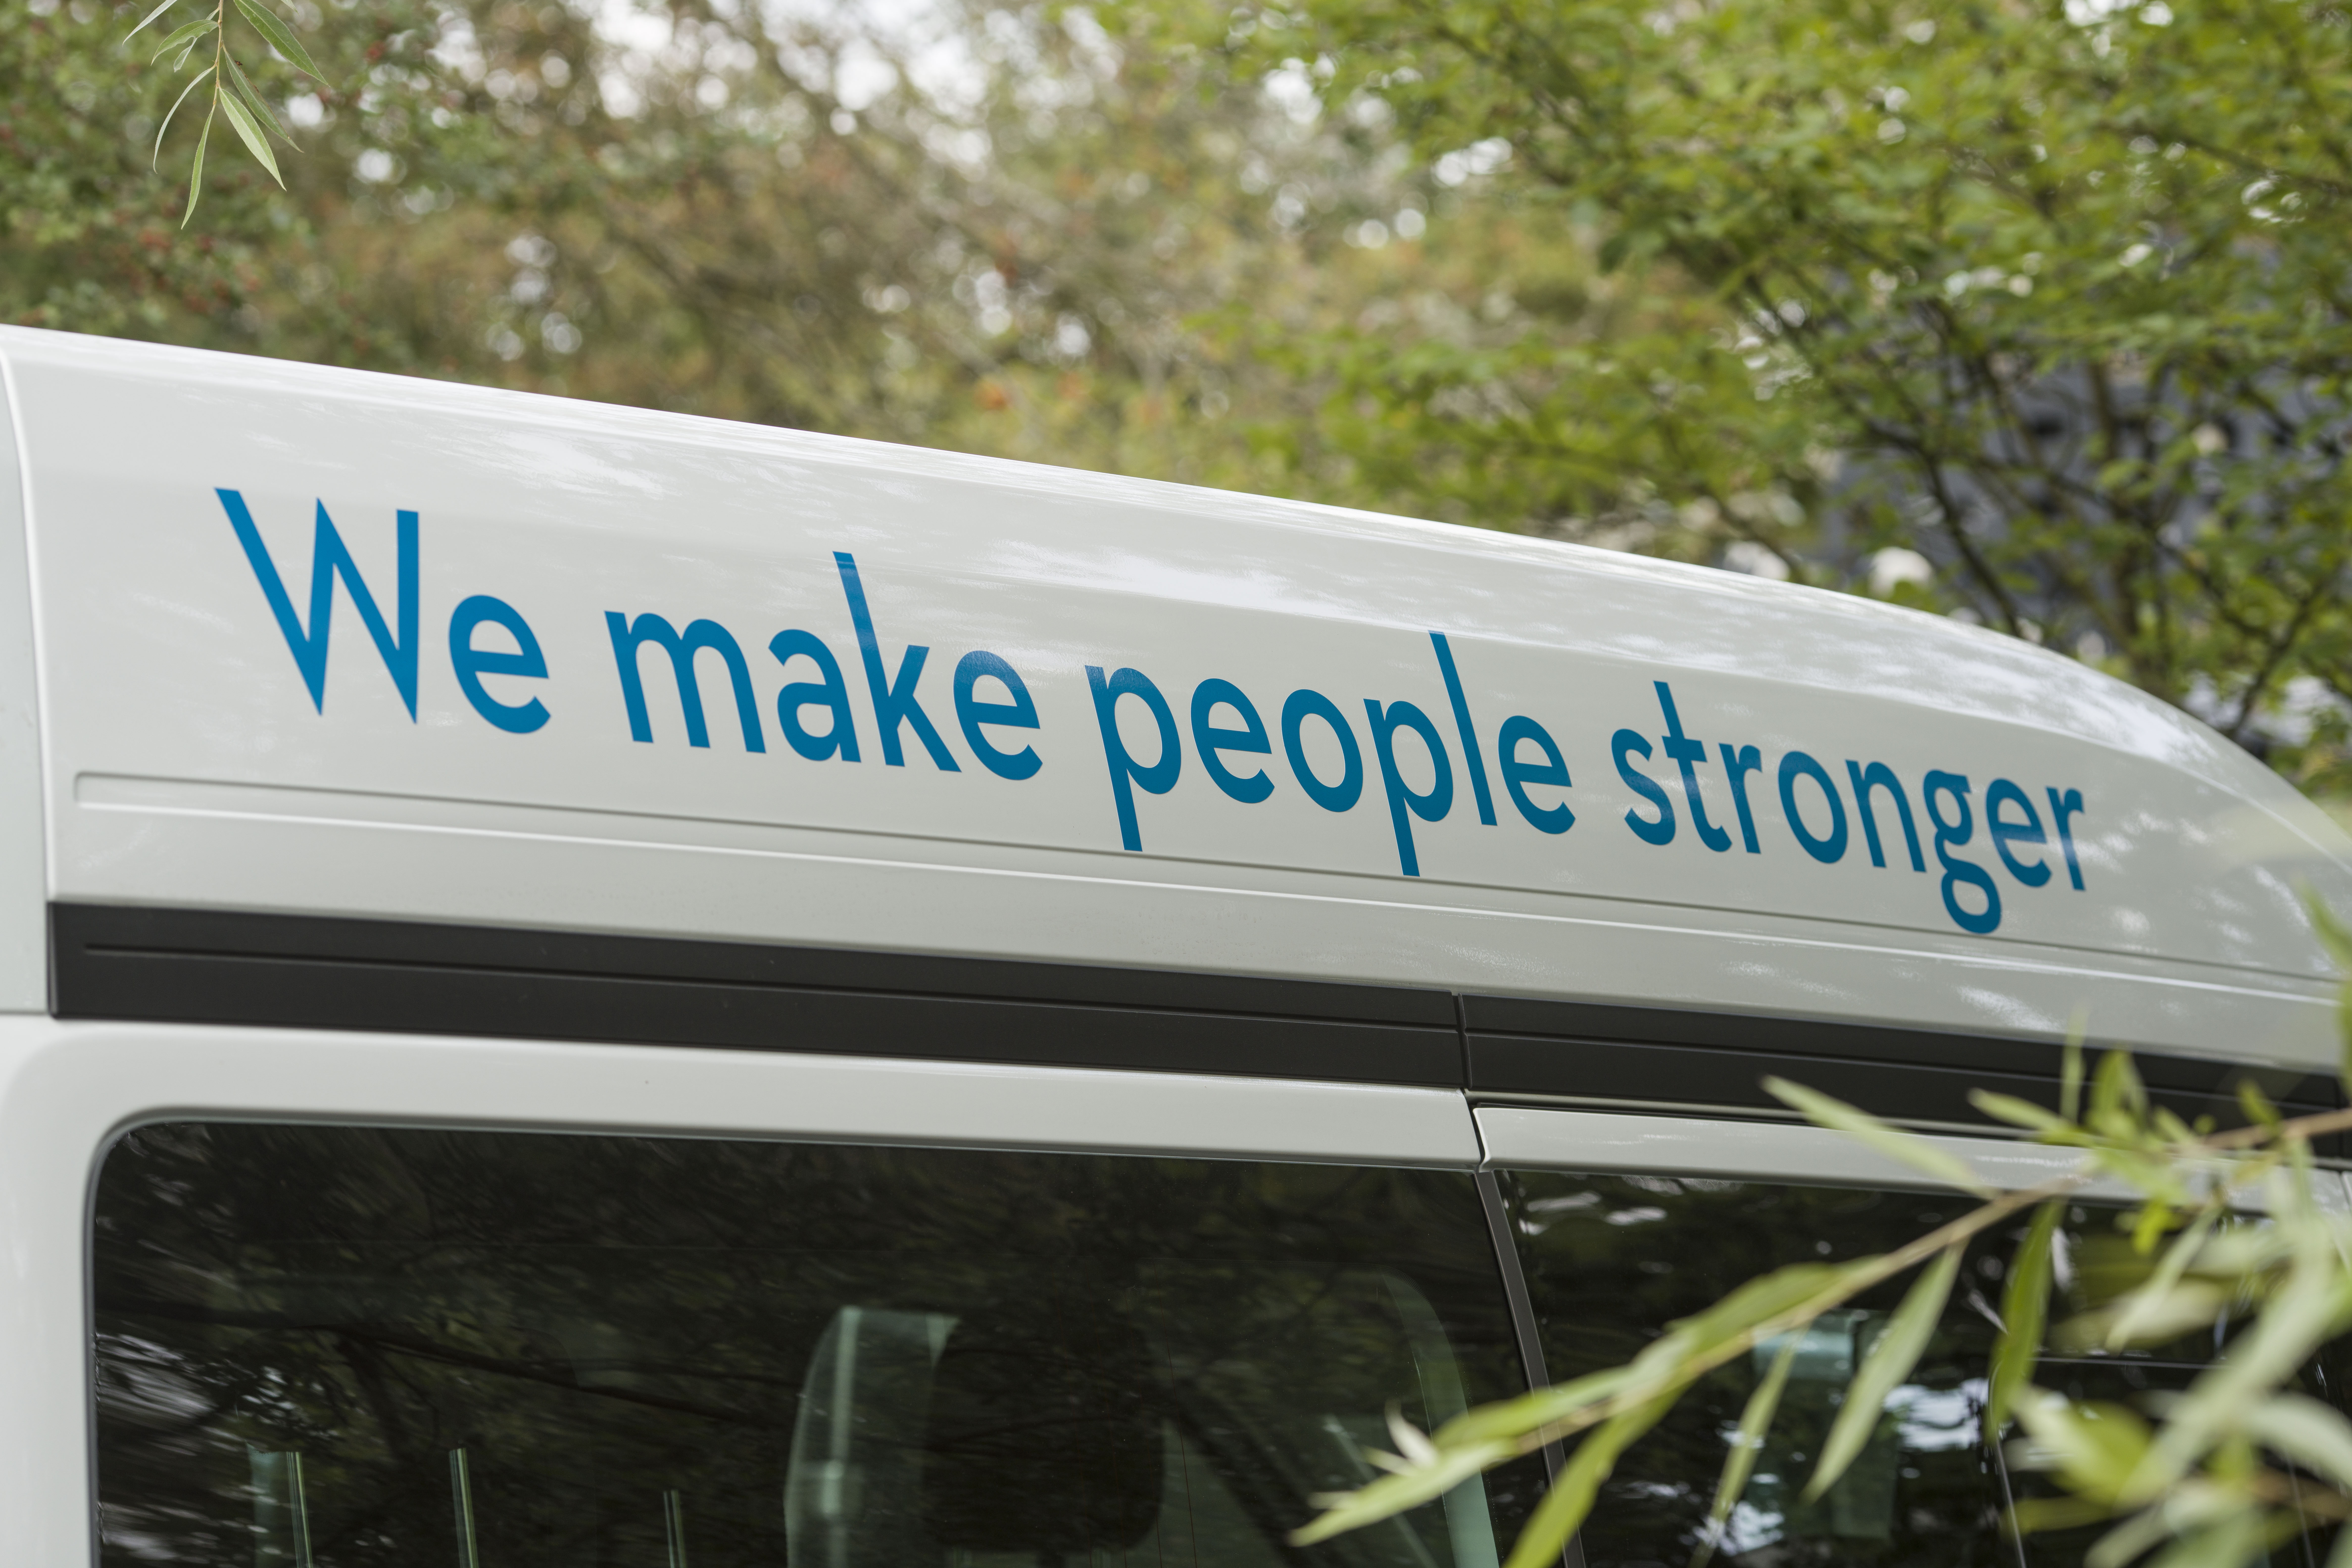 We make people stronger